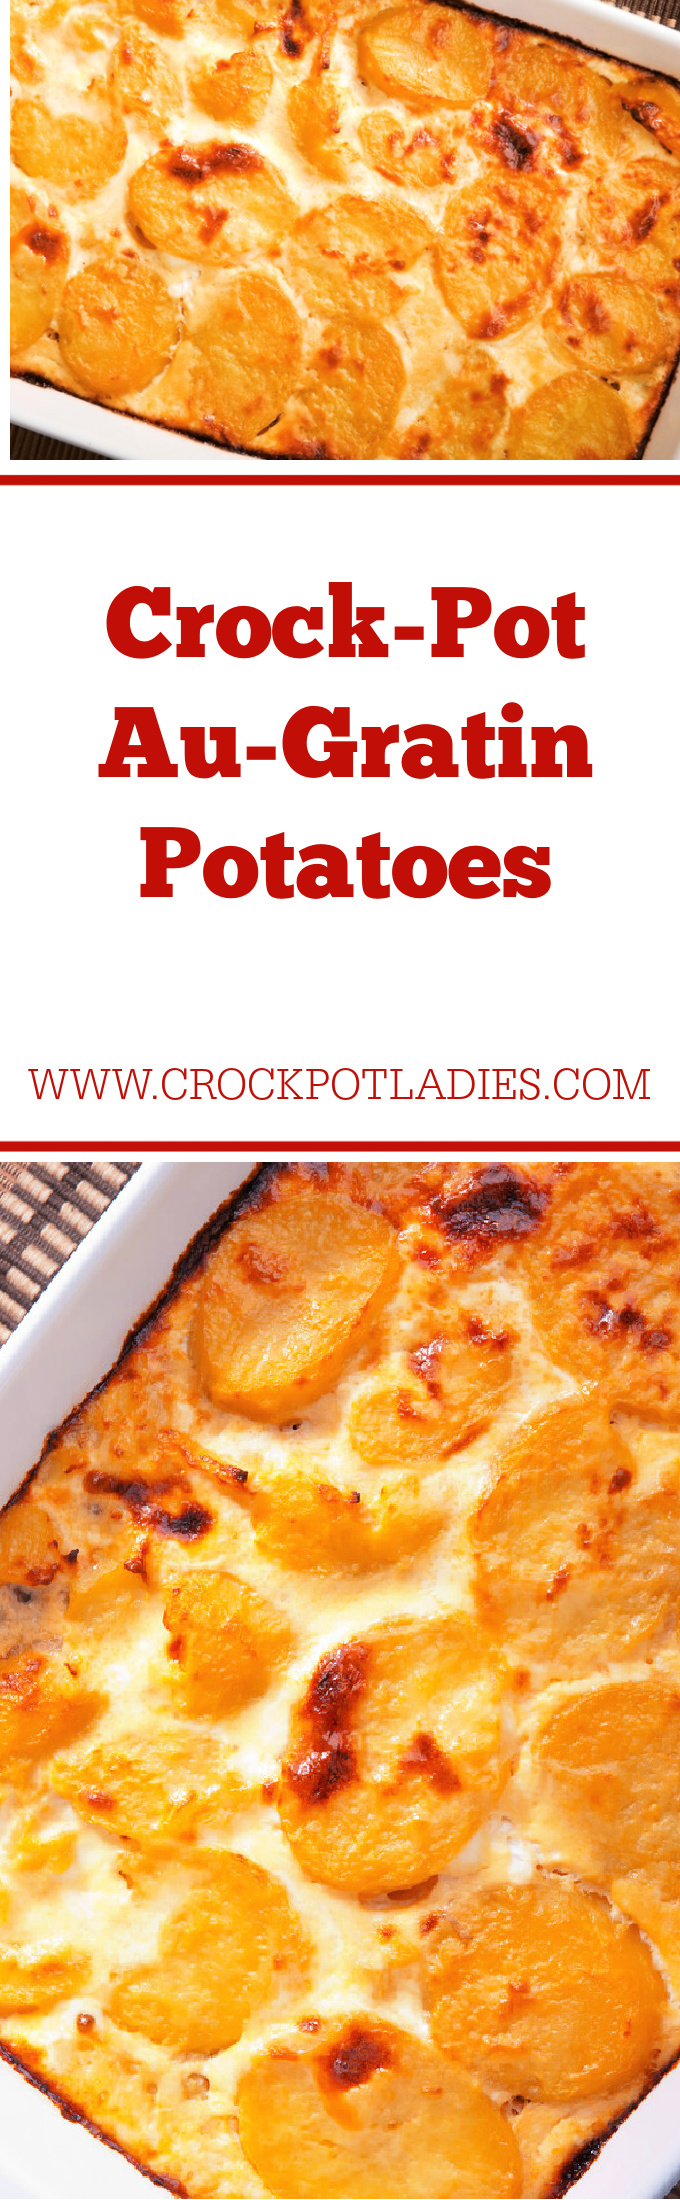 Crock-Pot Au-Gratin Potatoes